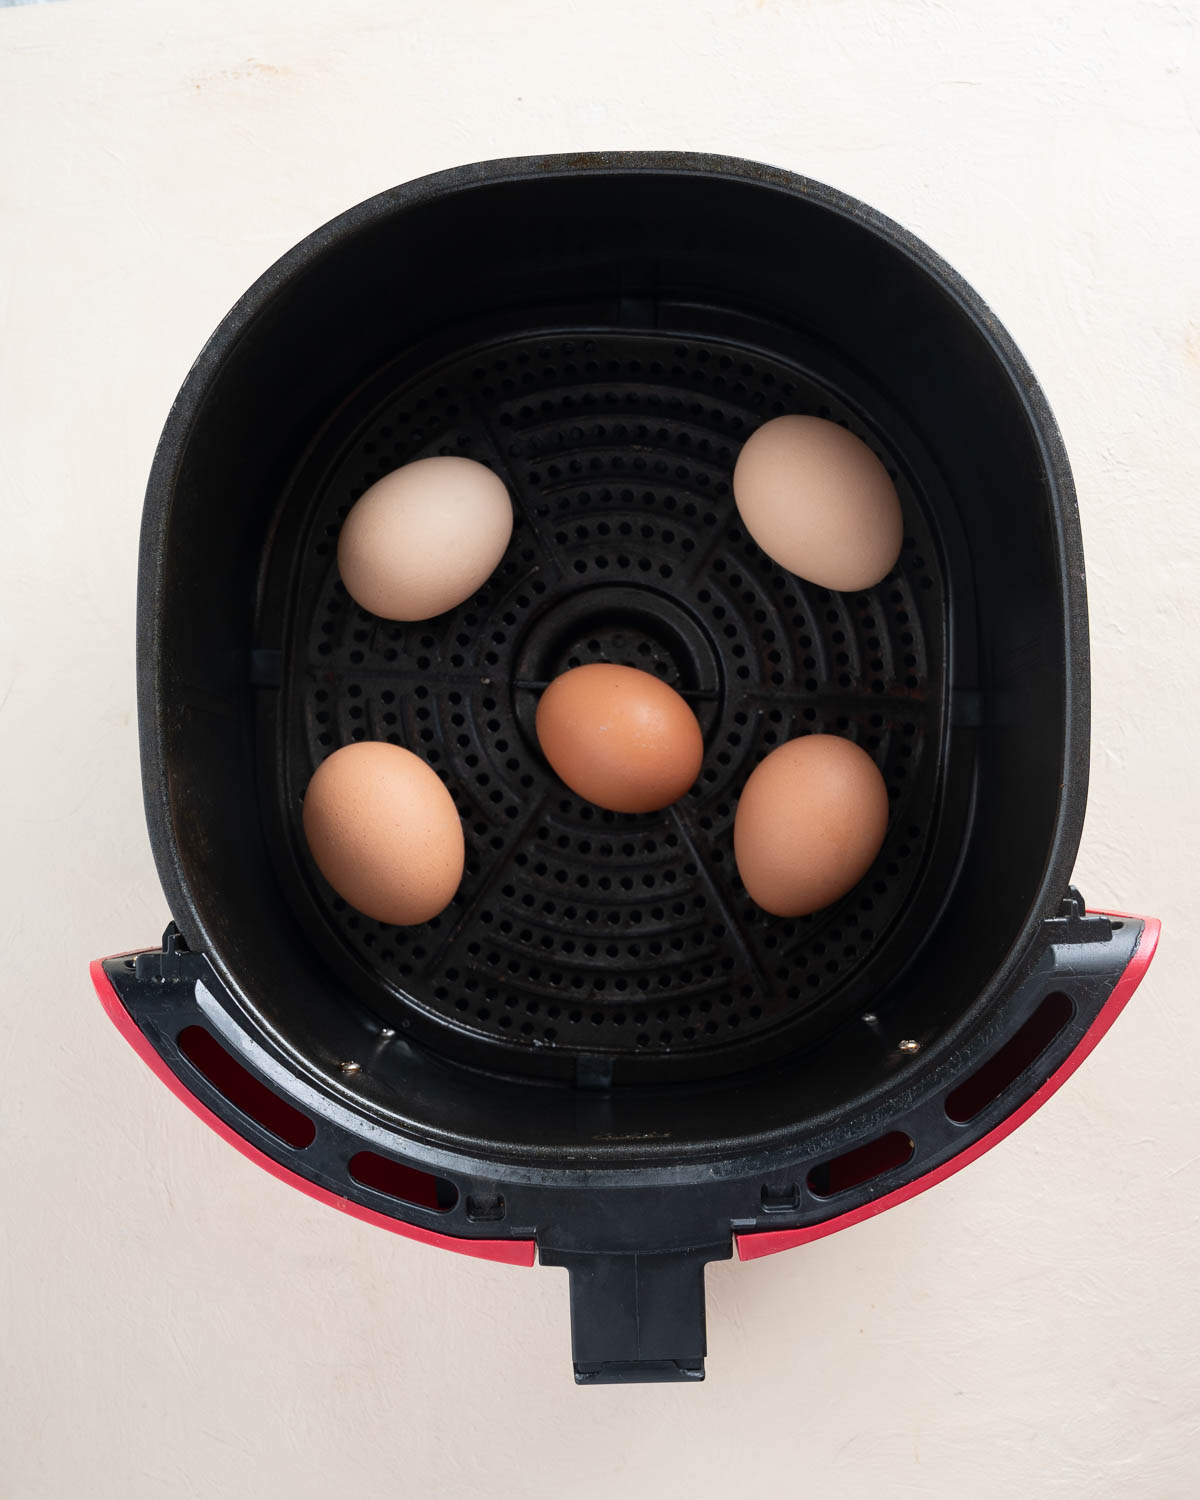 Eggs in a red air fryer basket